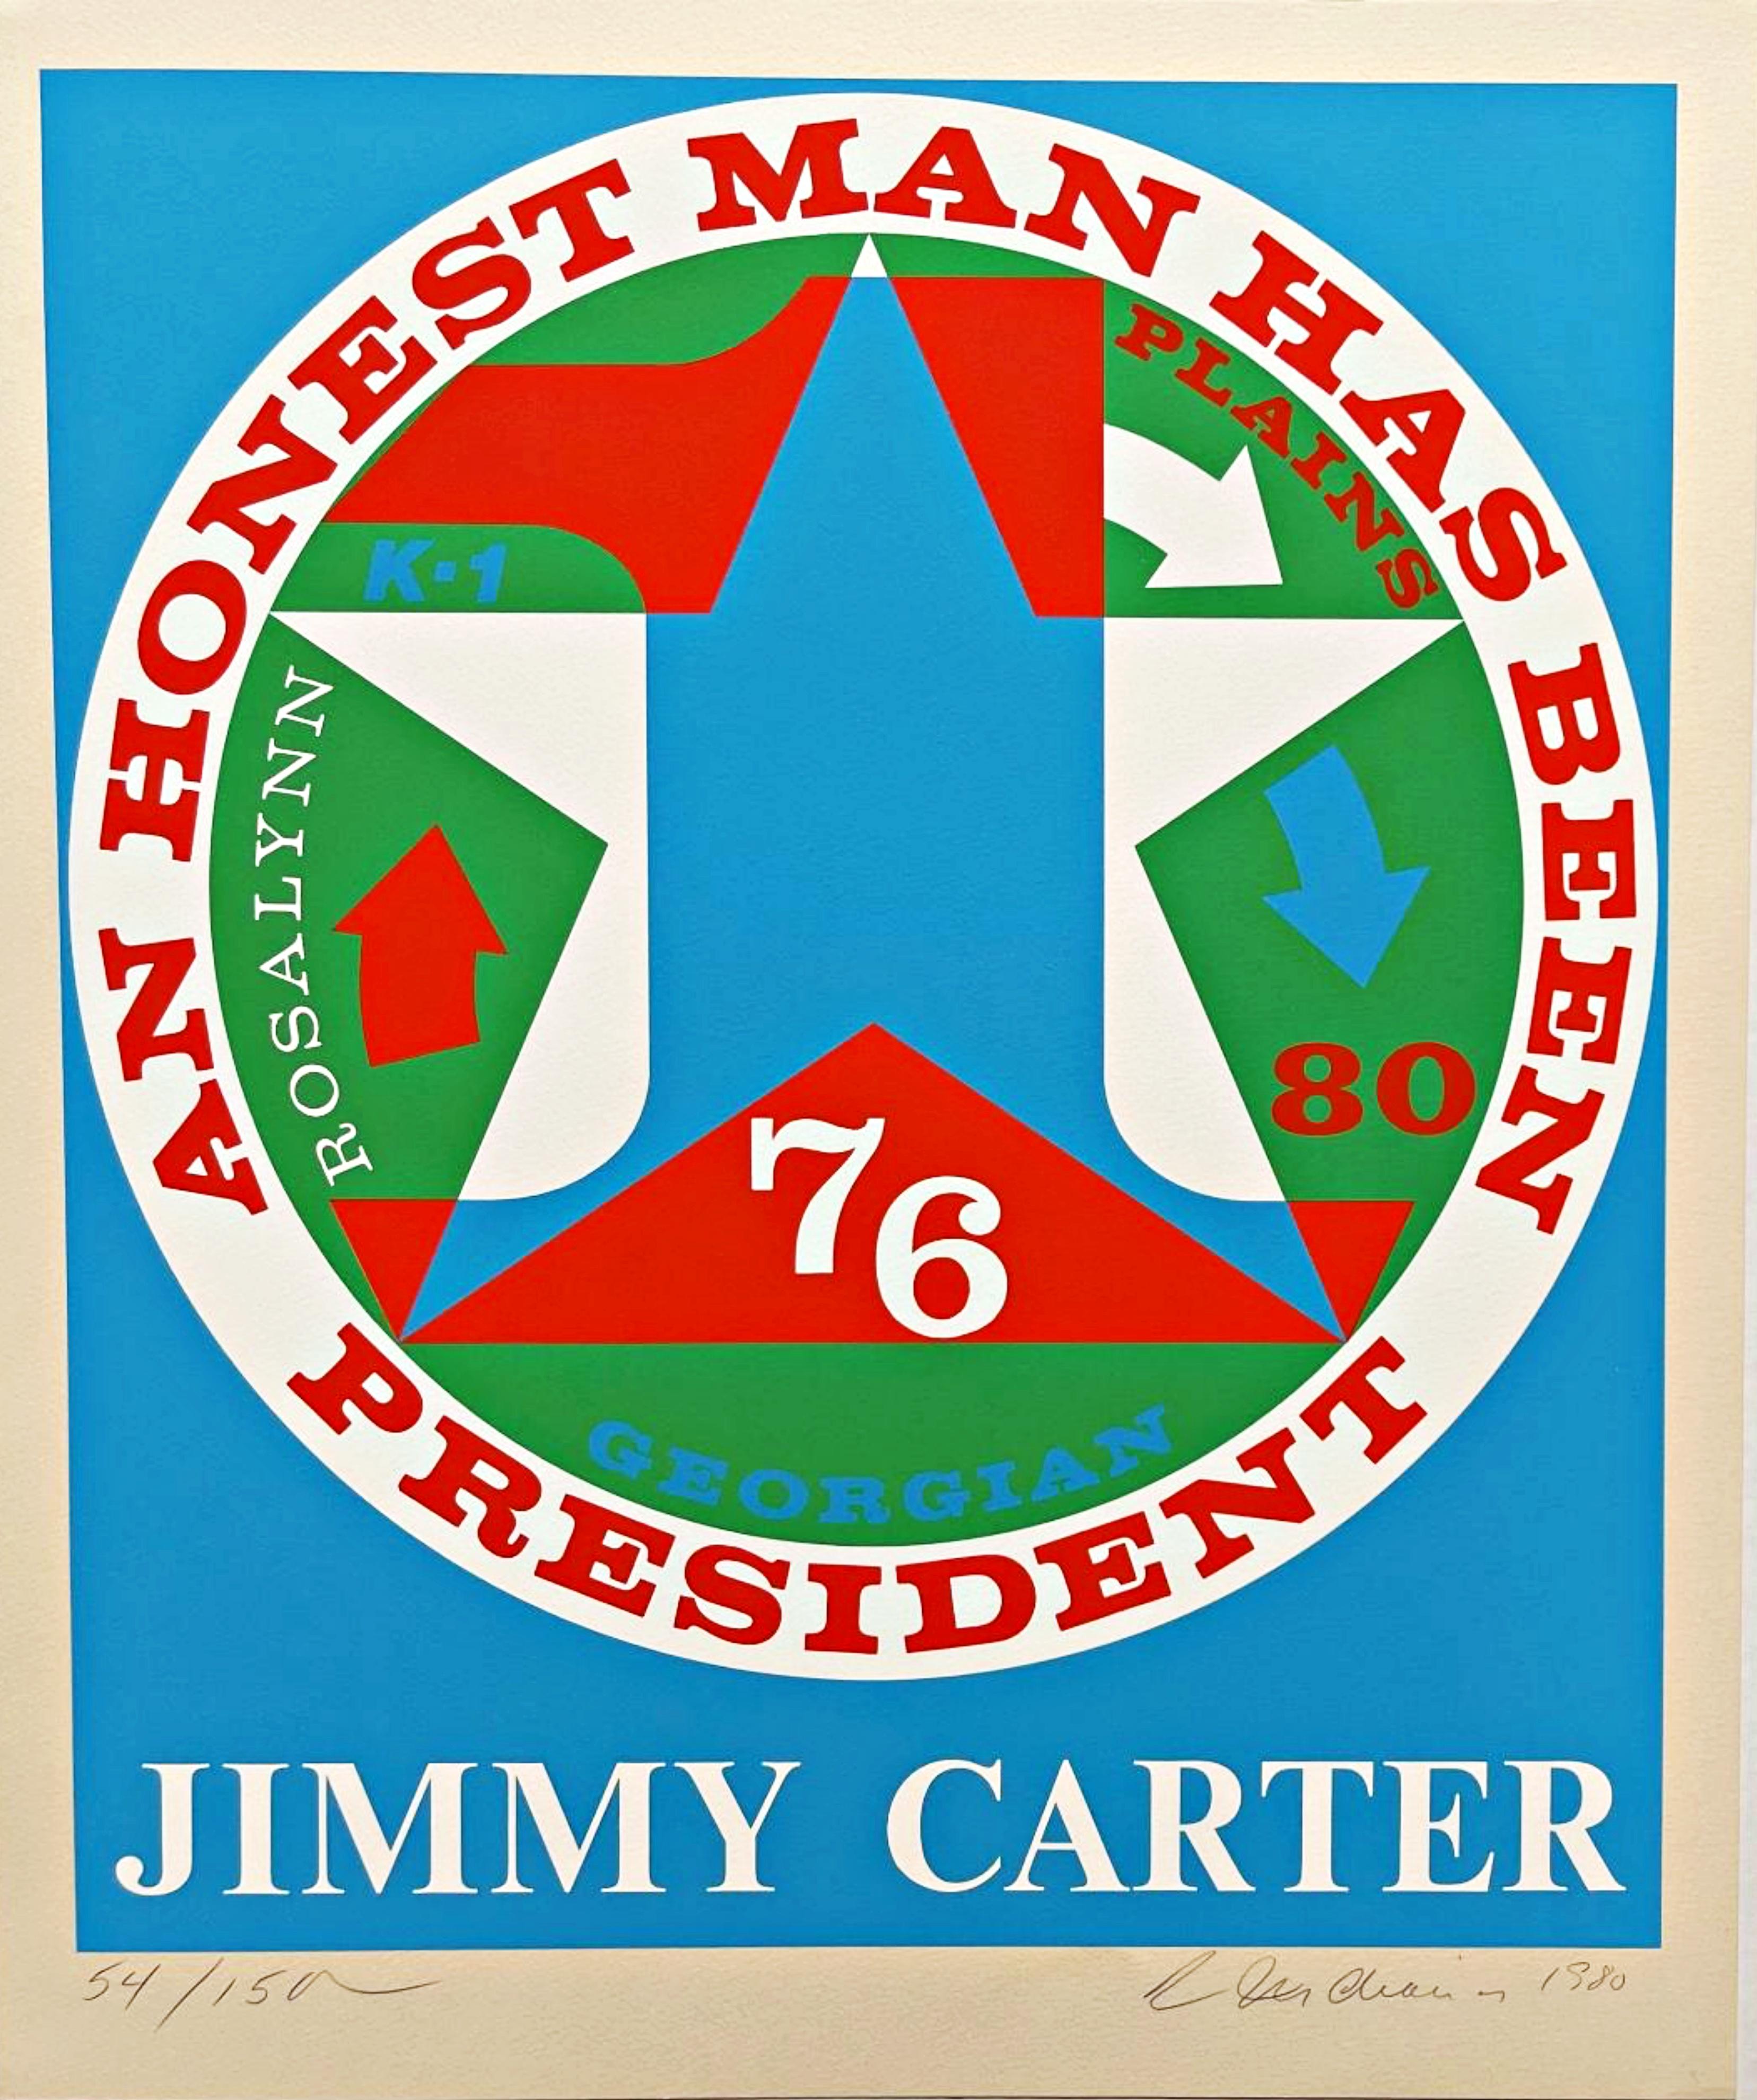 An Honest Man Has Been President: Homage to Jimmy Carter (Sheehan, 112)